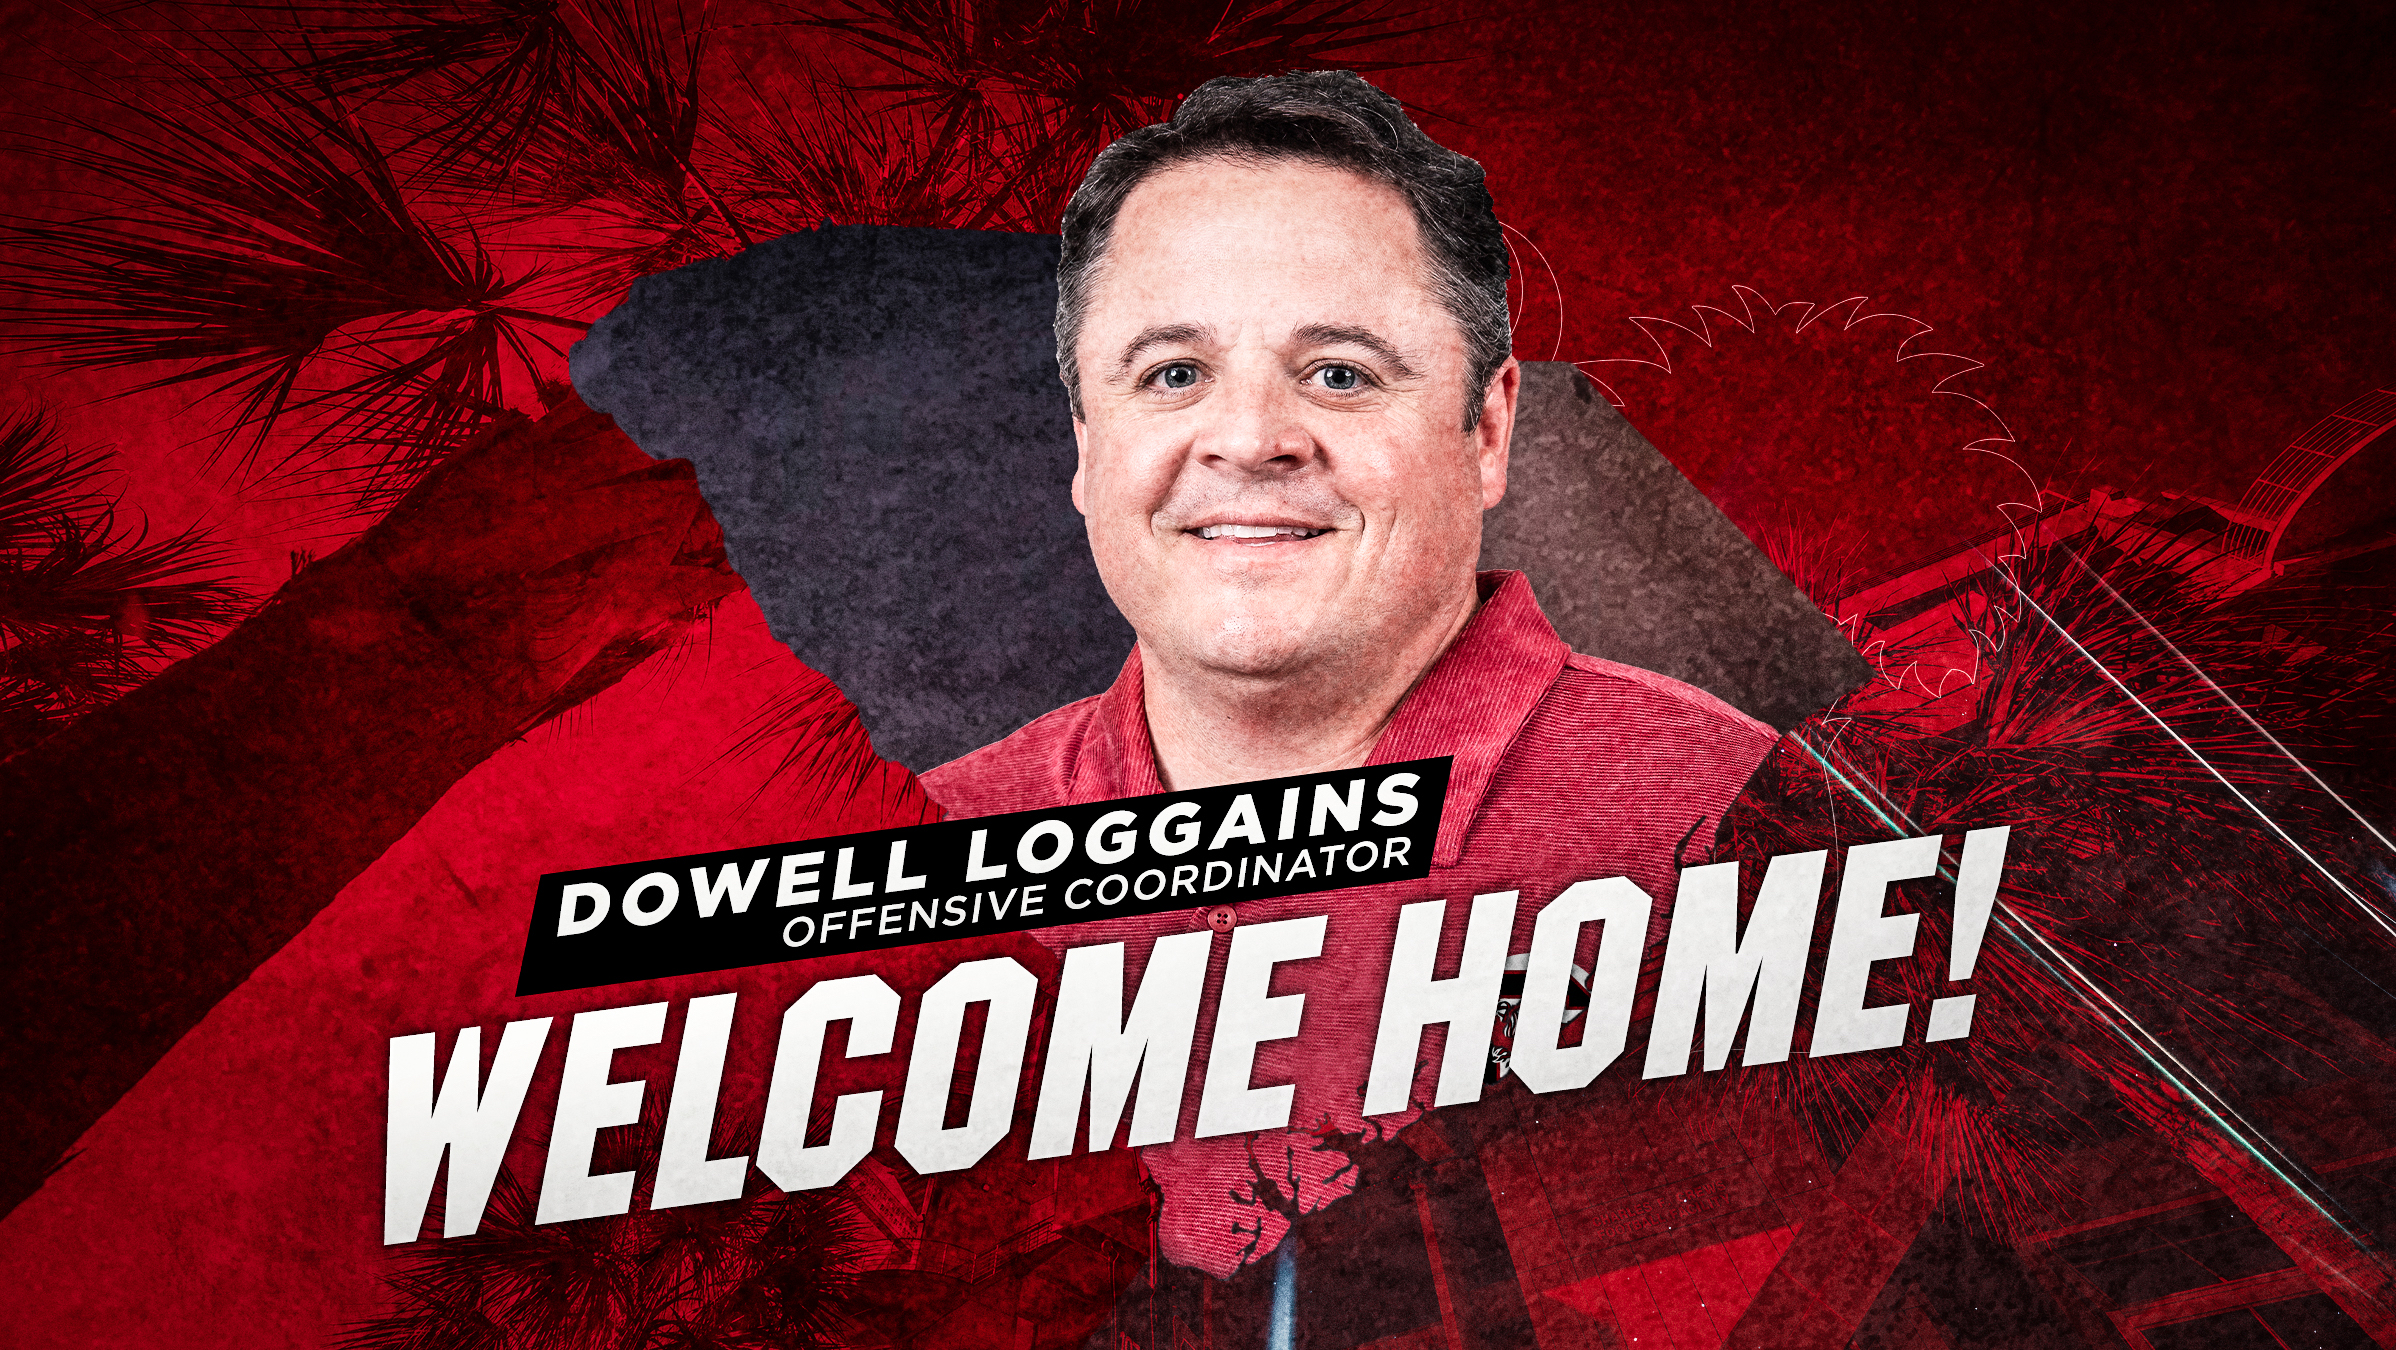 Beamer Tabs Dowell Loggains as Offensive Coordinator/Quarterbacks Coach